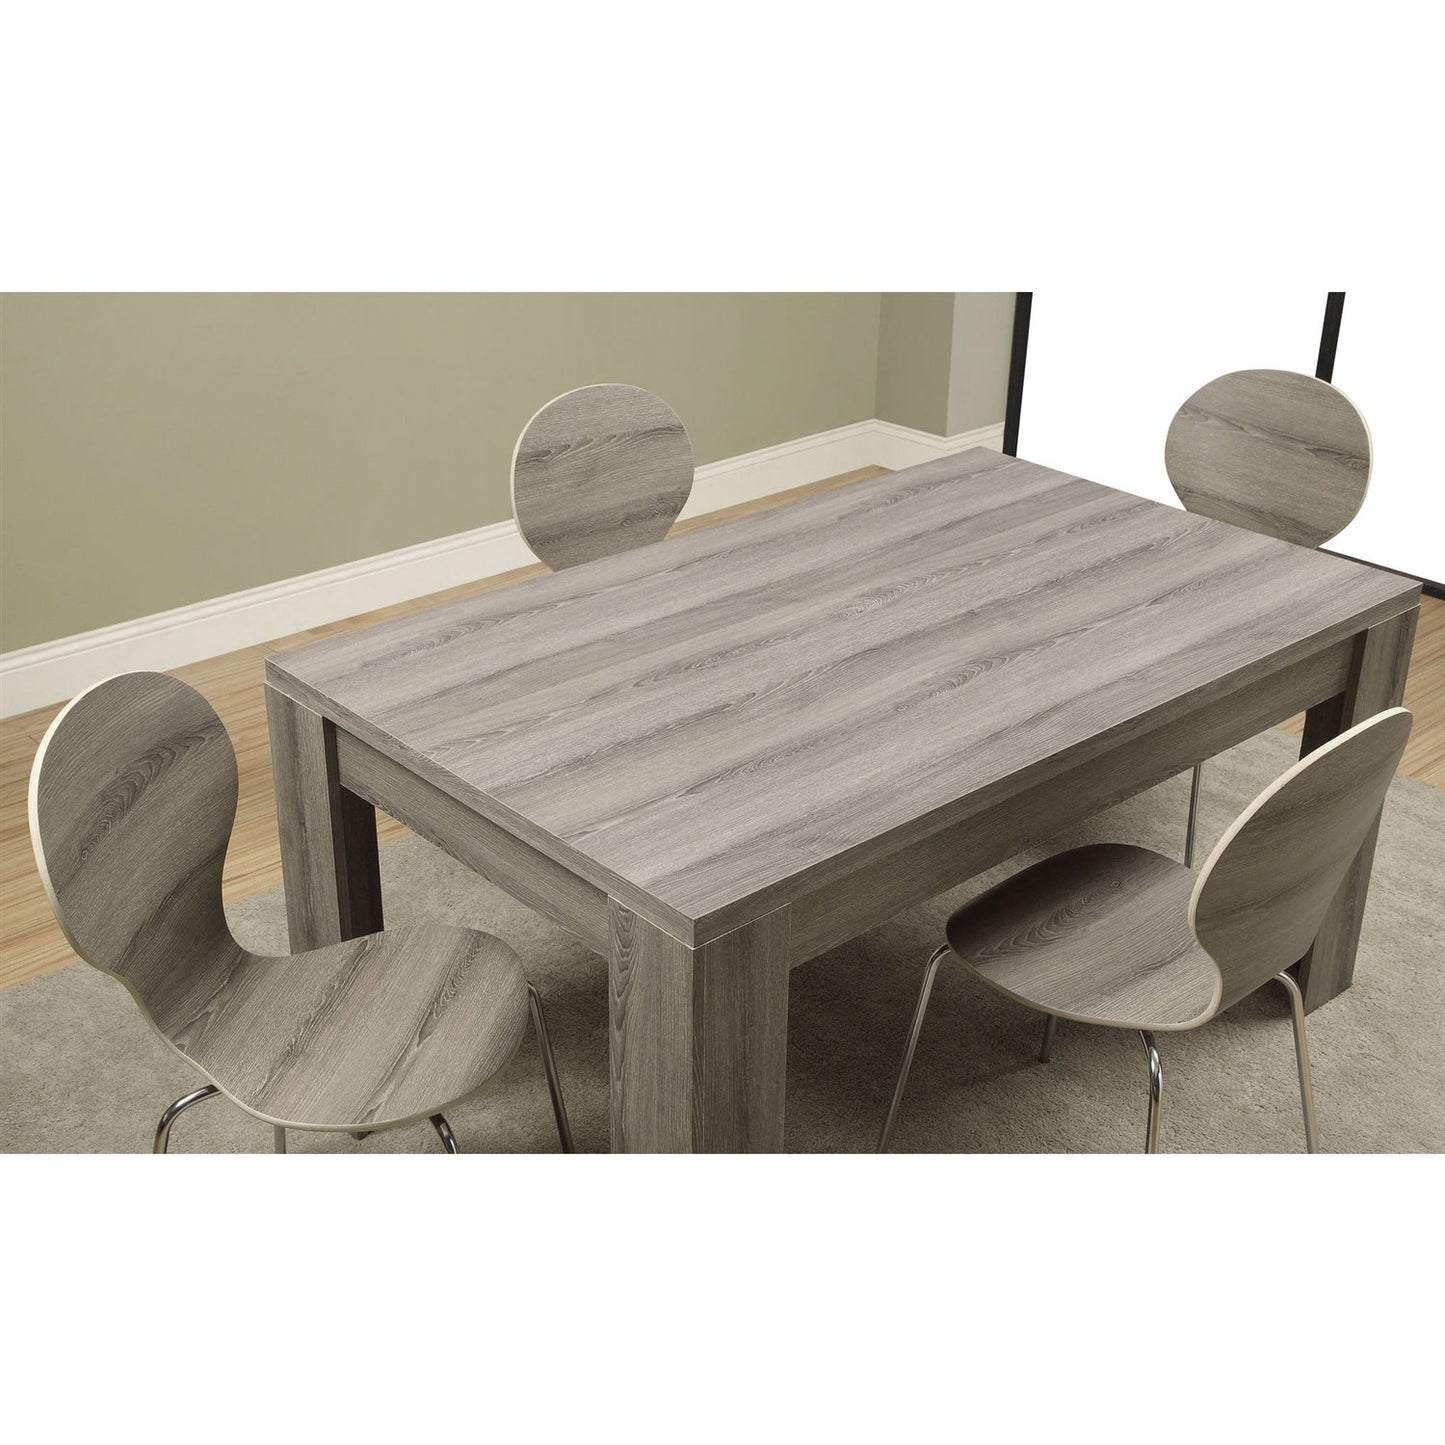 Dining > Dining Tables - Modern Block Leg Rectangular Dining Table In Dark Taupe Wood Finish